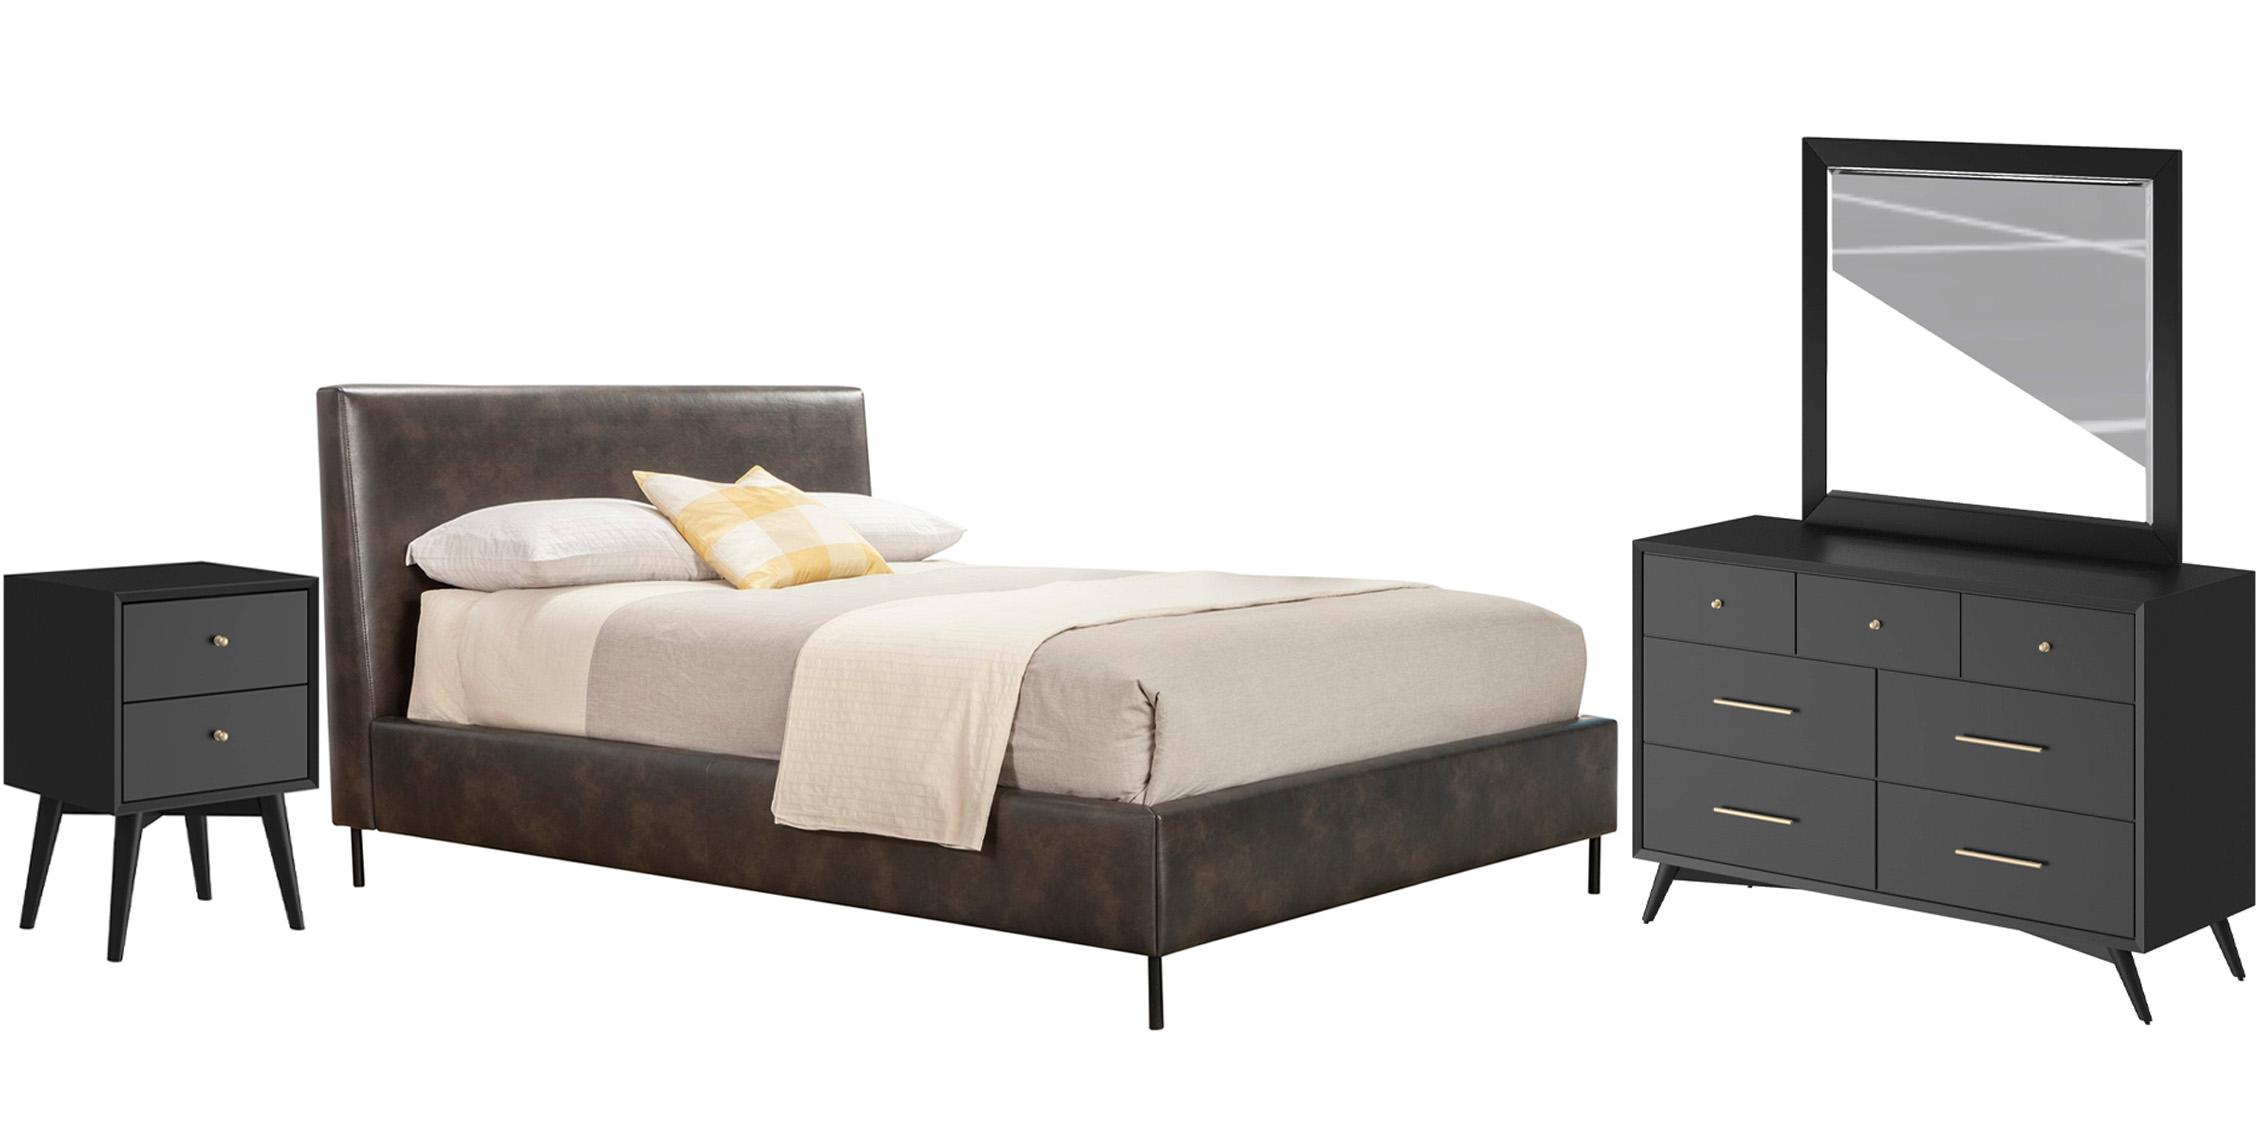 Modern Platform Bedroom Set SOPHIA / FLYNN 6902F-GRY-Set-4-BLK in Gray, Black Faux Leather